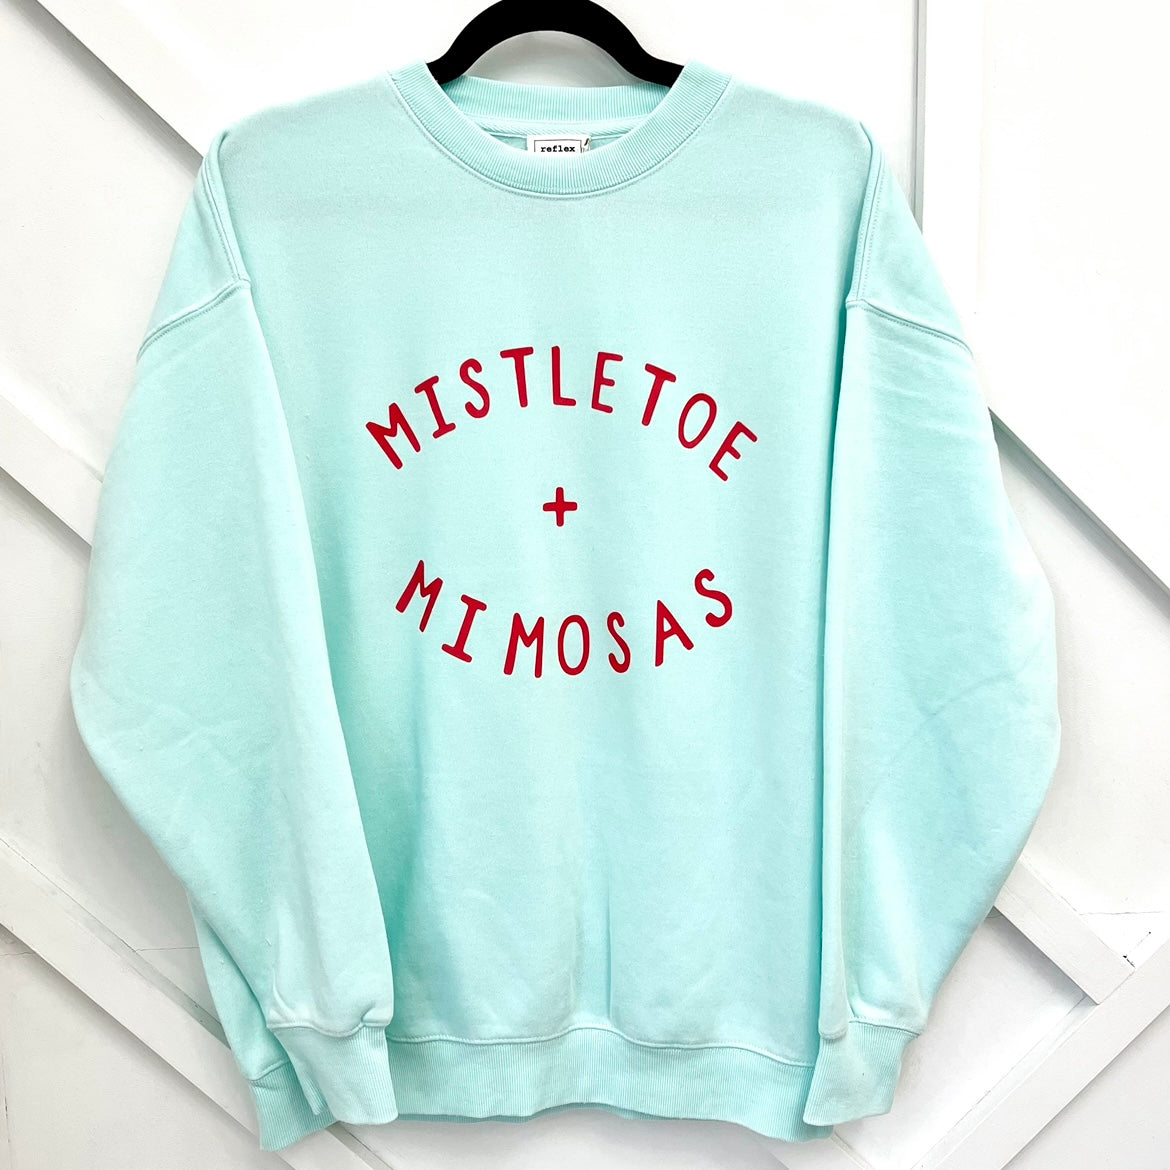 Mistletoe + Mimosas Sweatshirt